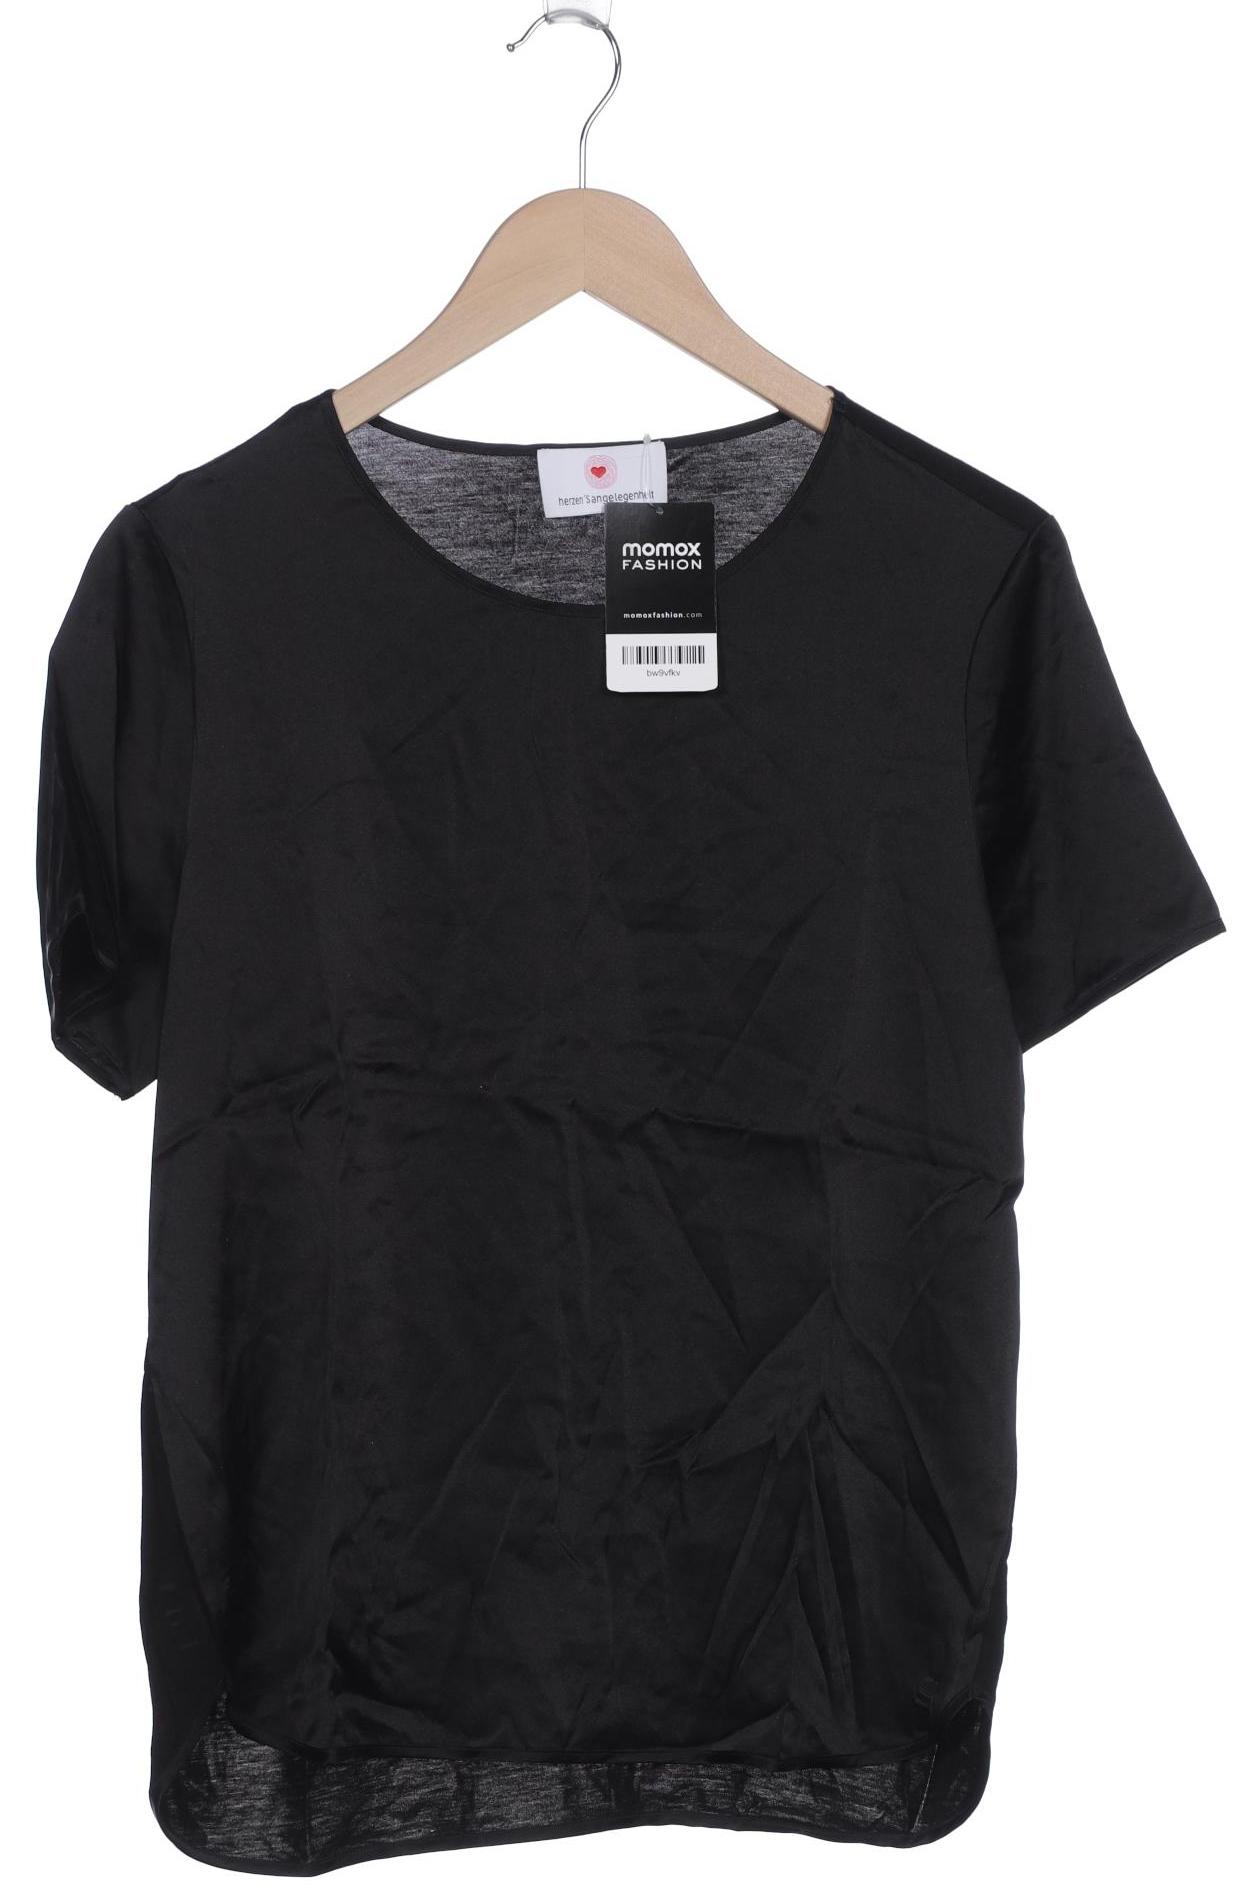 Herzensangelegenheit Damen T-Shirt, schwarz, Gr. 36 von herzensangelegenheit